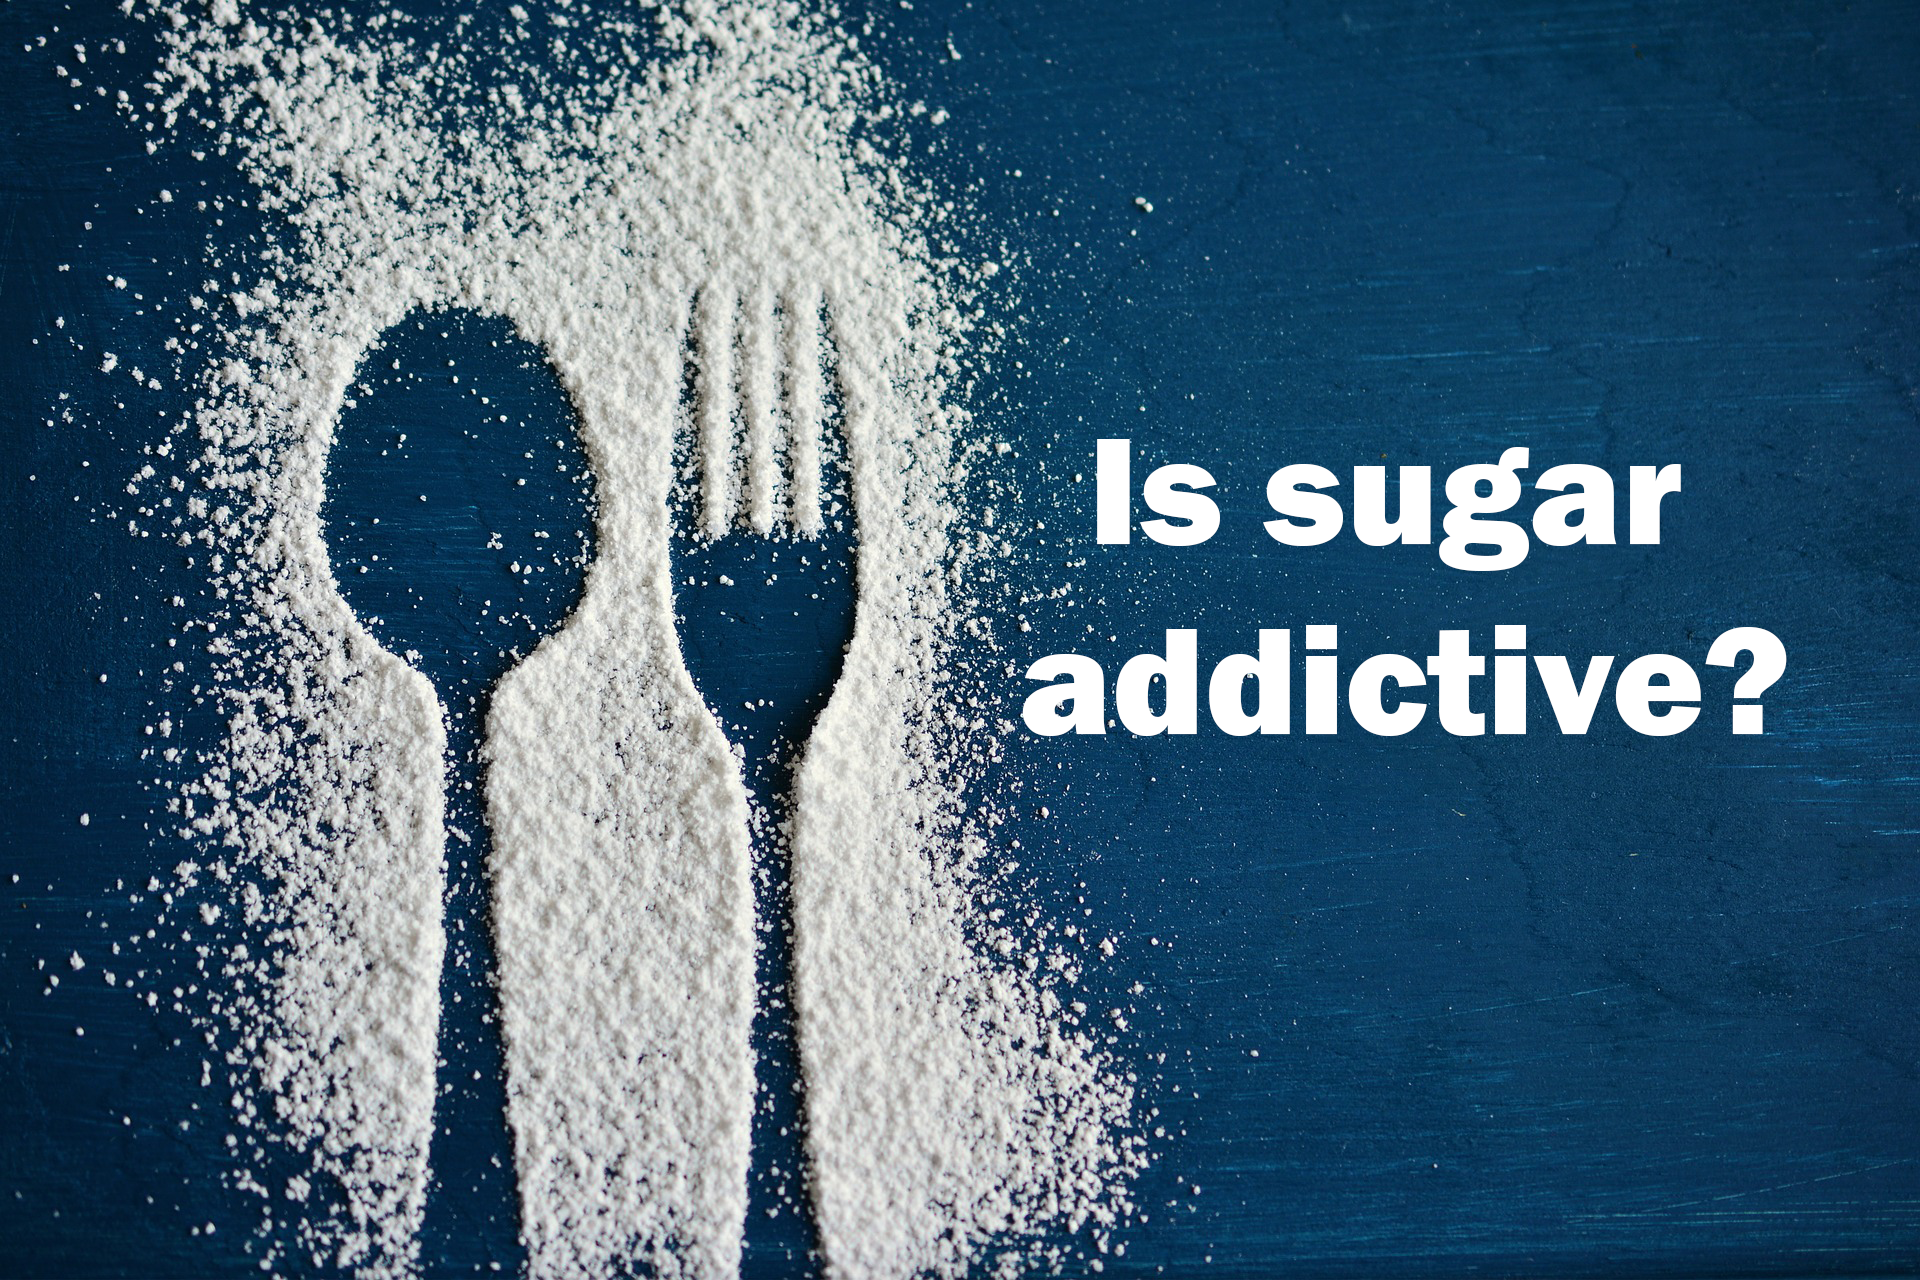 is sugar addictive